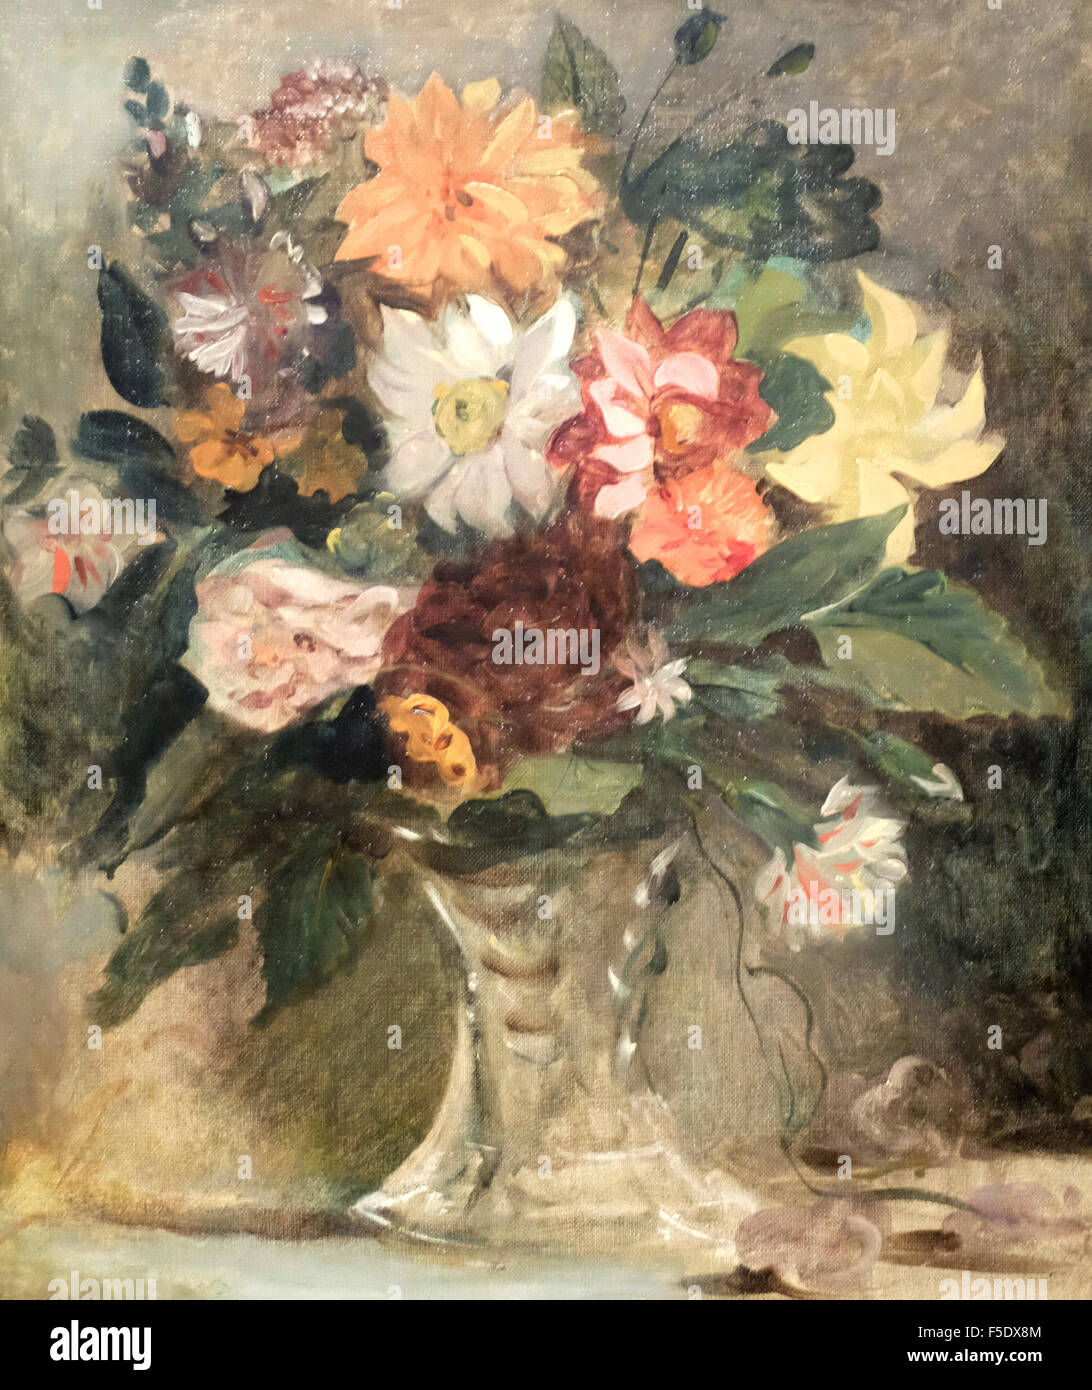 A Vase of Flowers - Eugene Delacroix 1833 Stock Photo